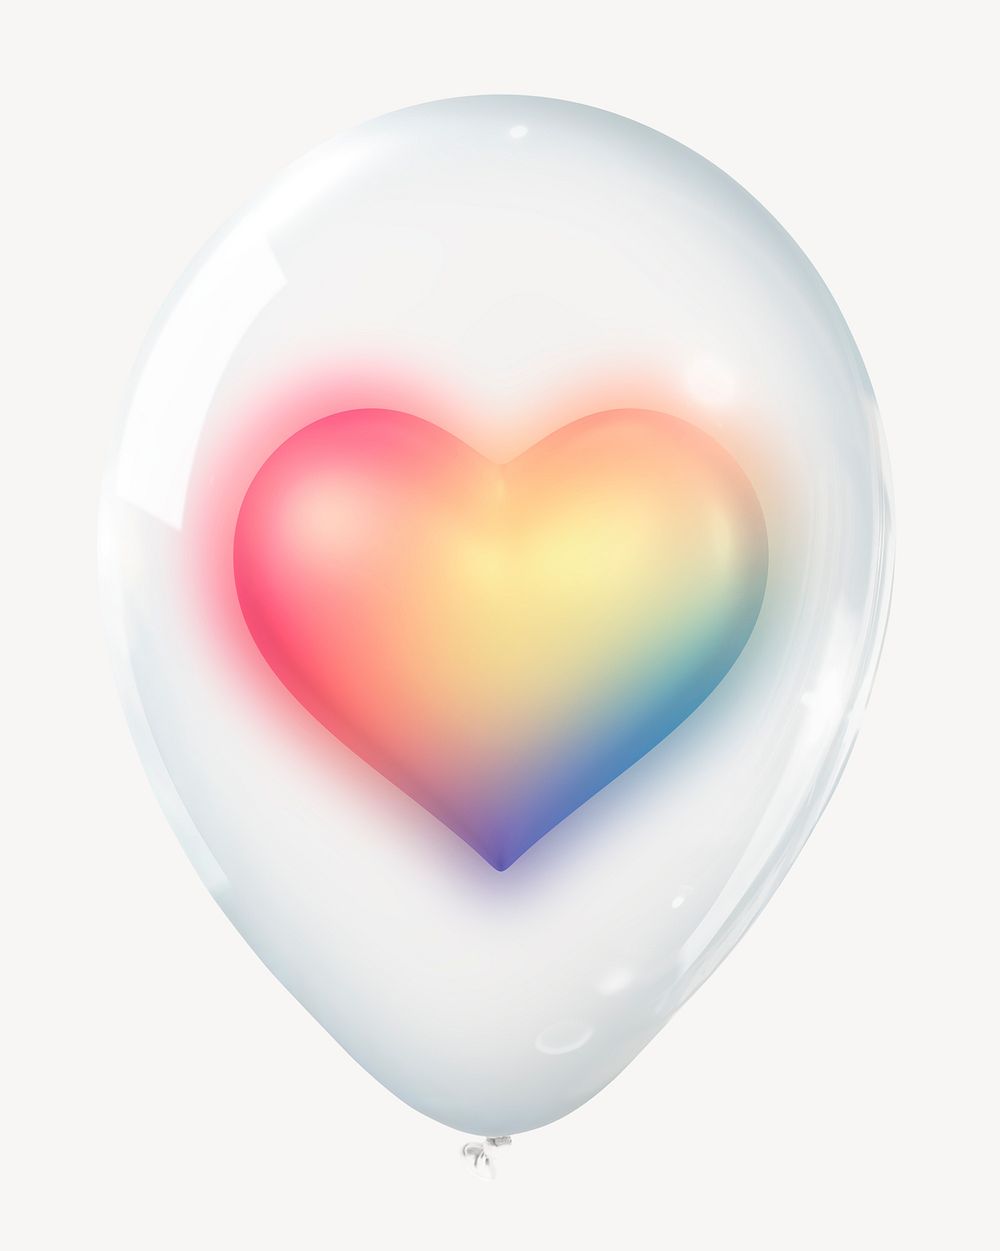 Colorful heart 3D balloon, aesthetic clipart